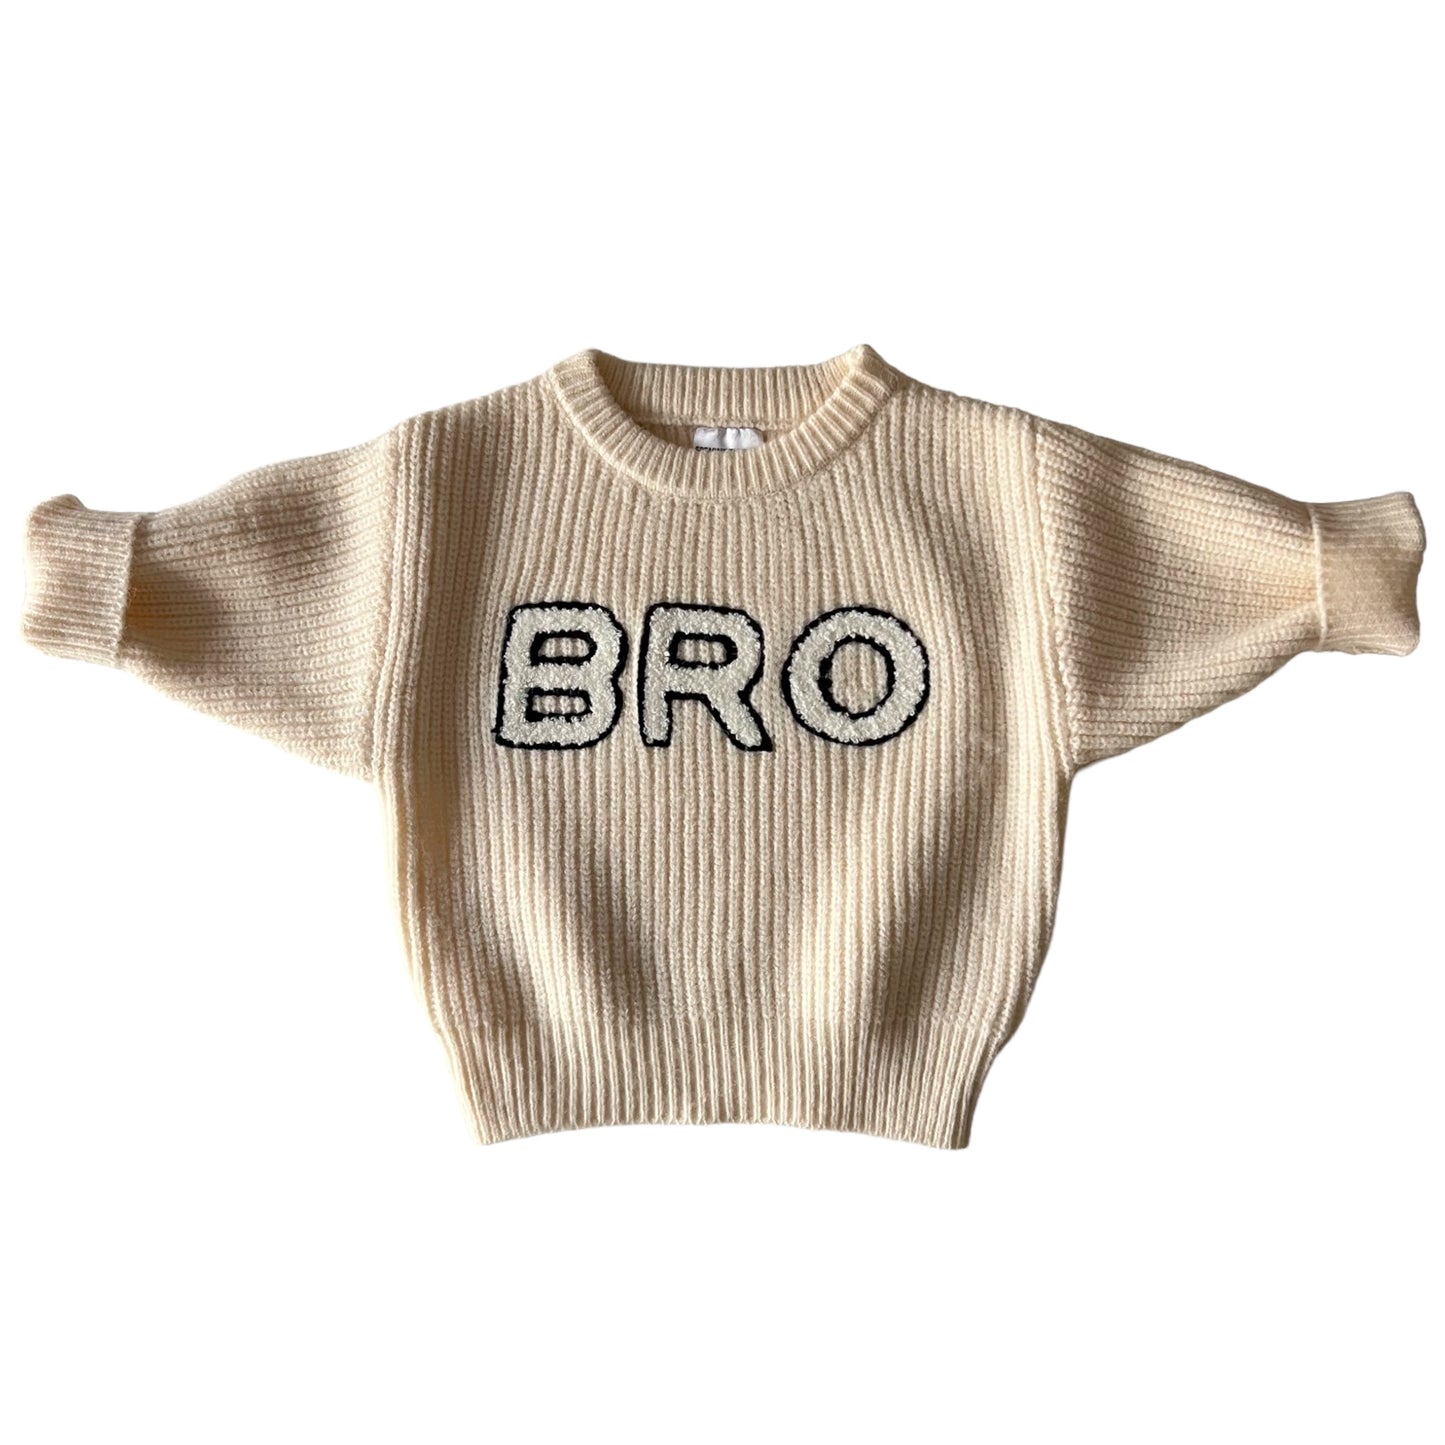 Bro Knit Sweater, Soft White